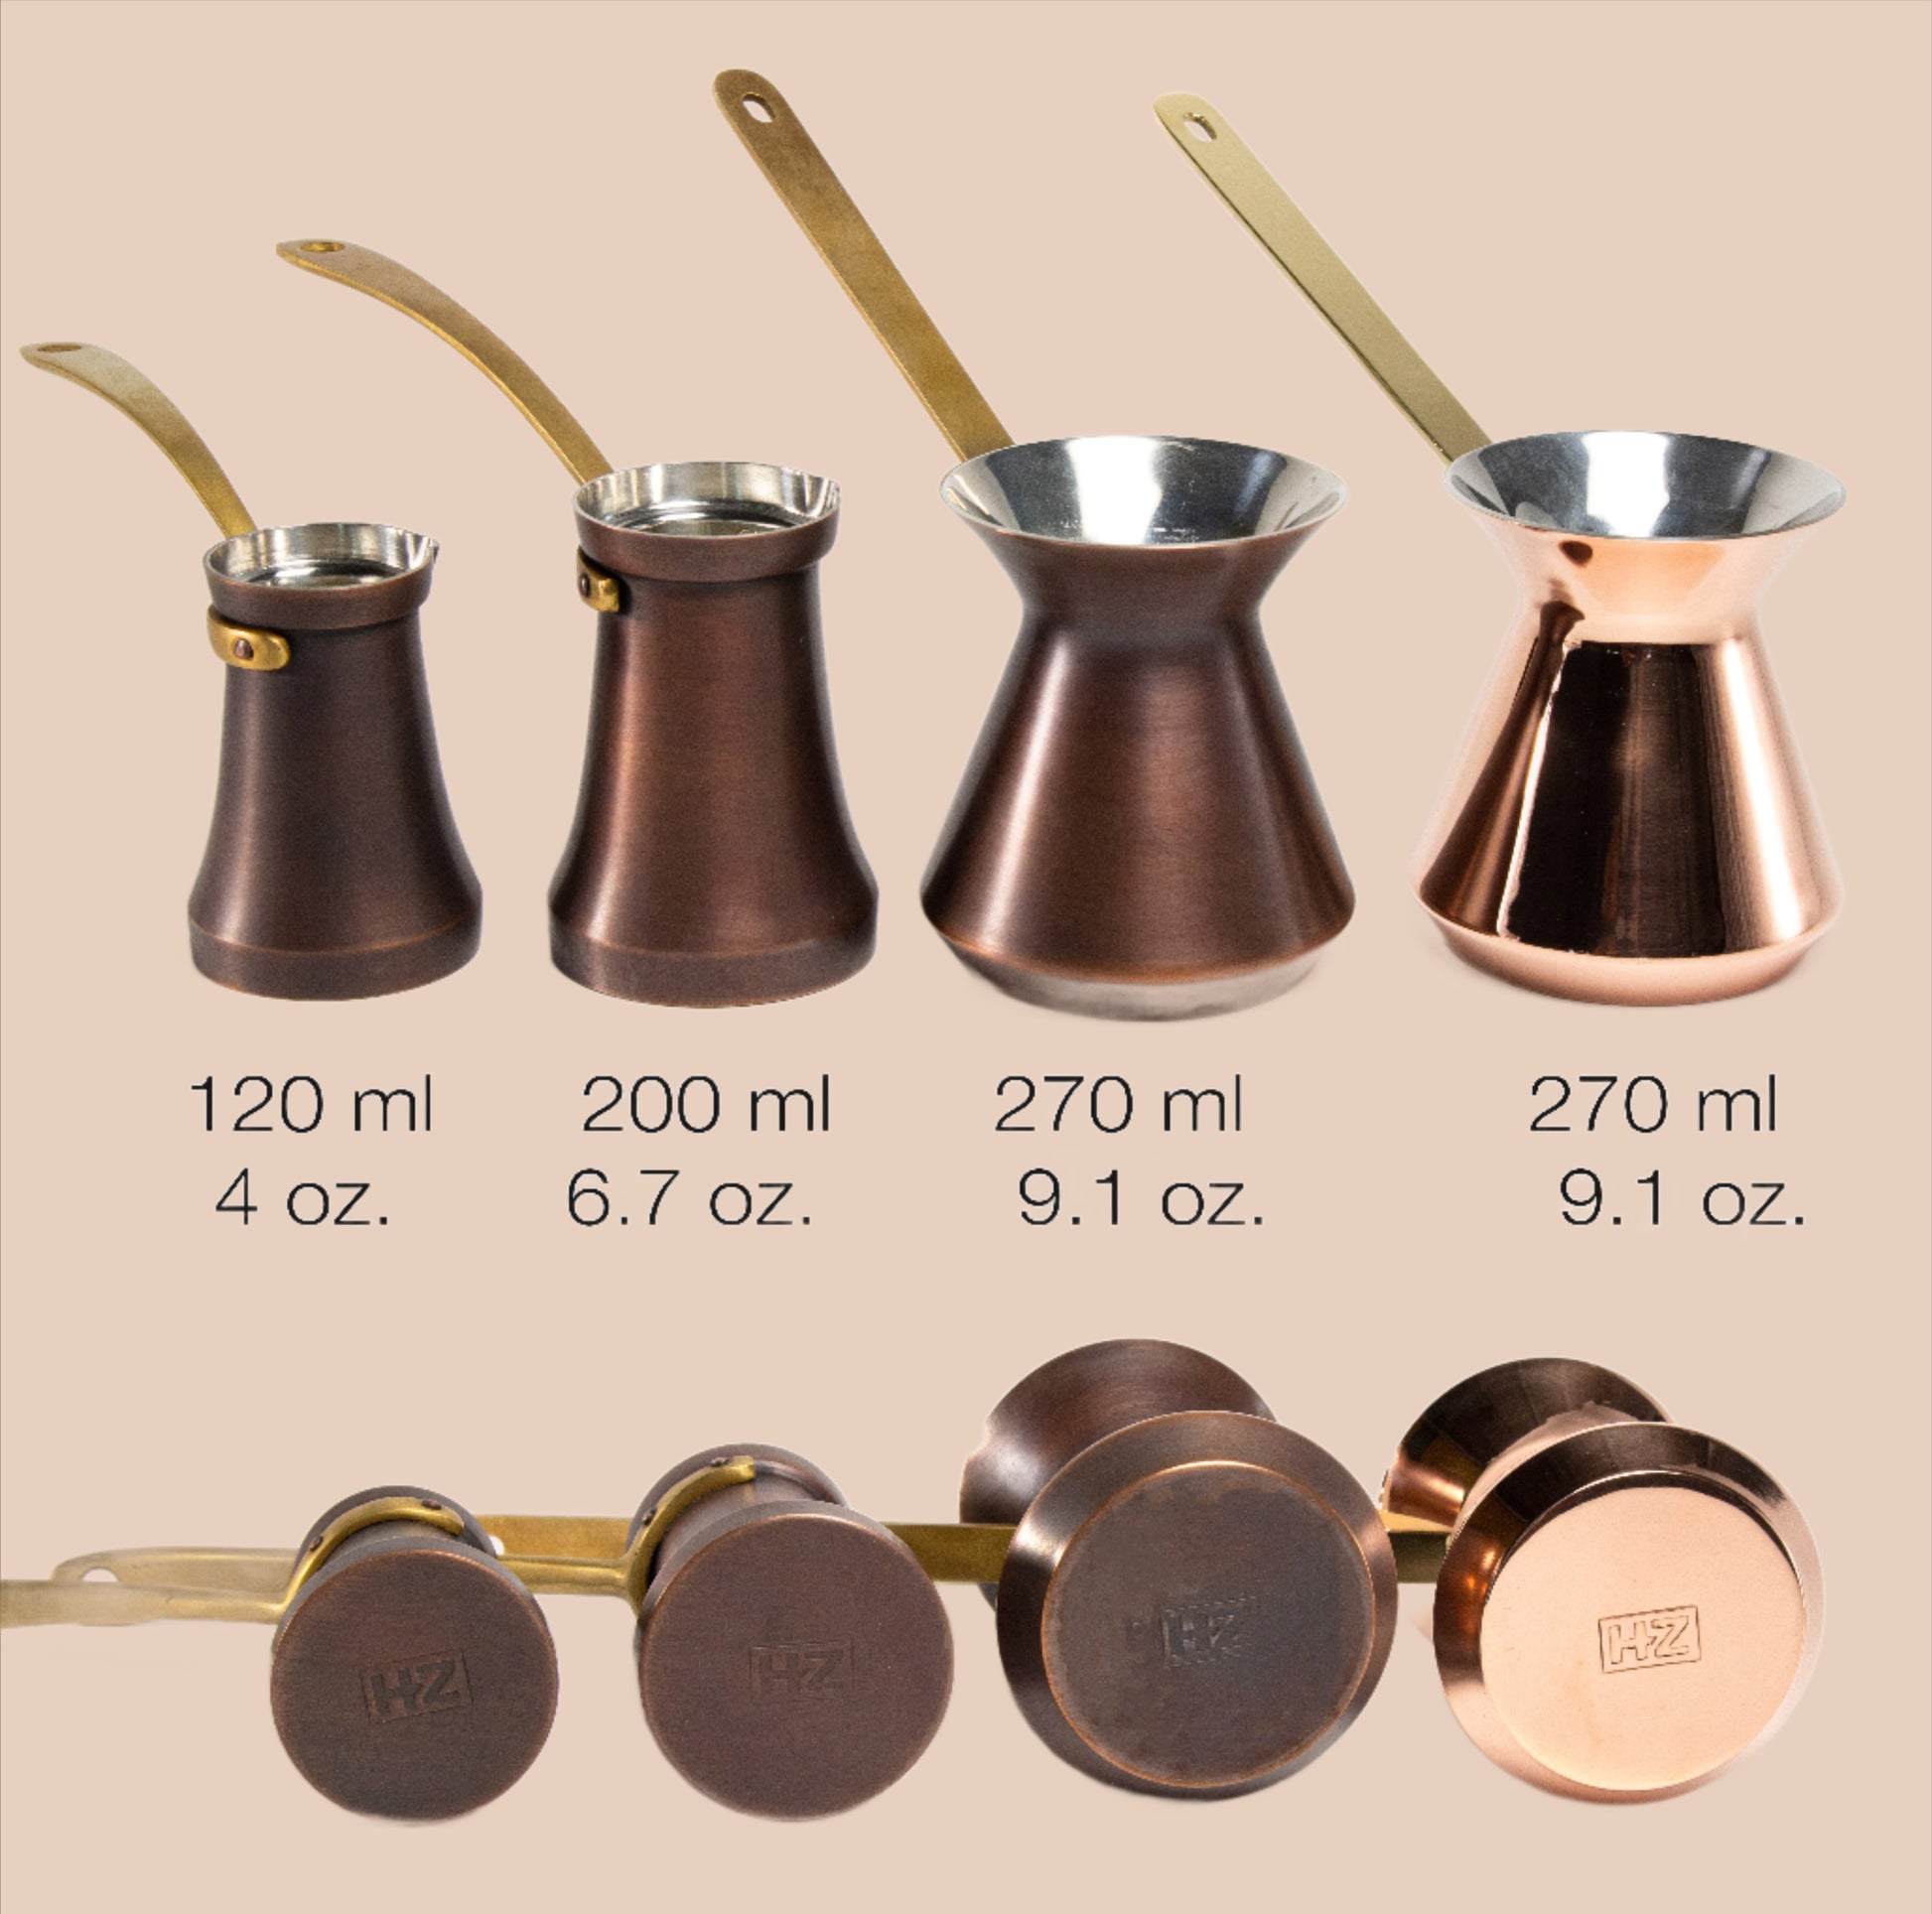 Turkish coffee pot size comparison